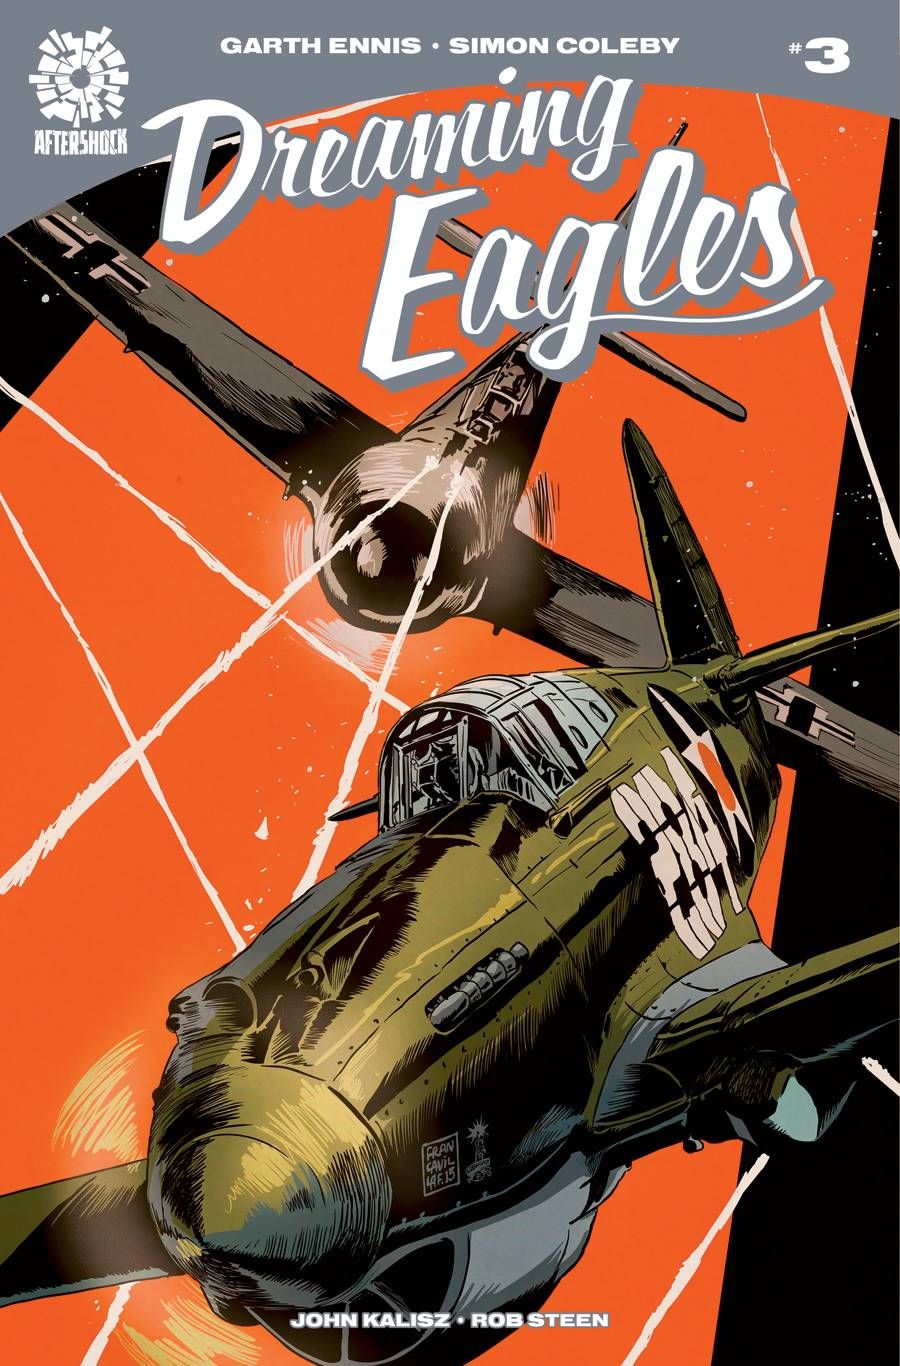 Dreaming Eagles #3 Comic